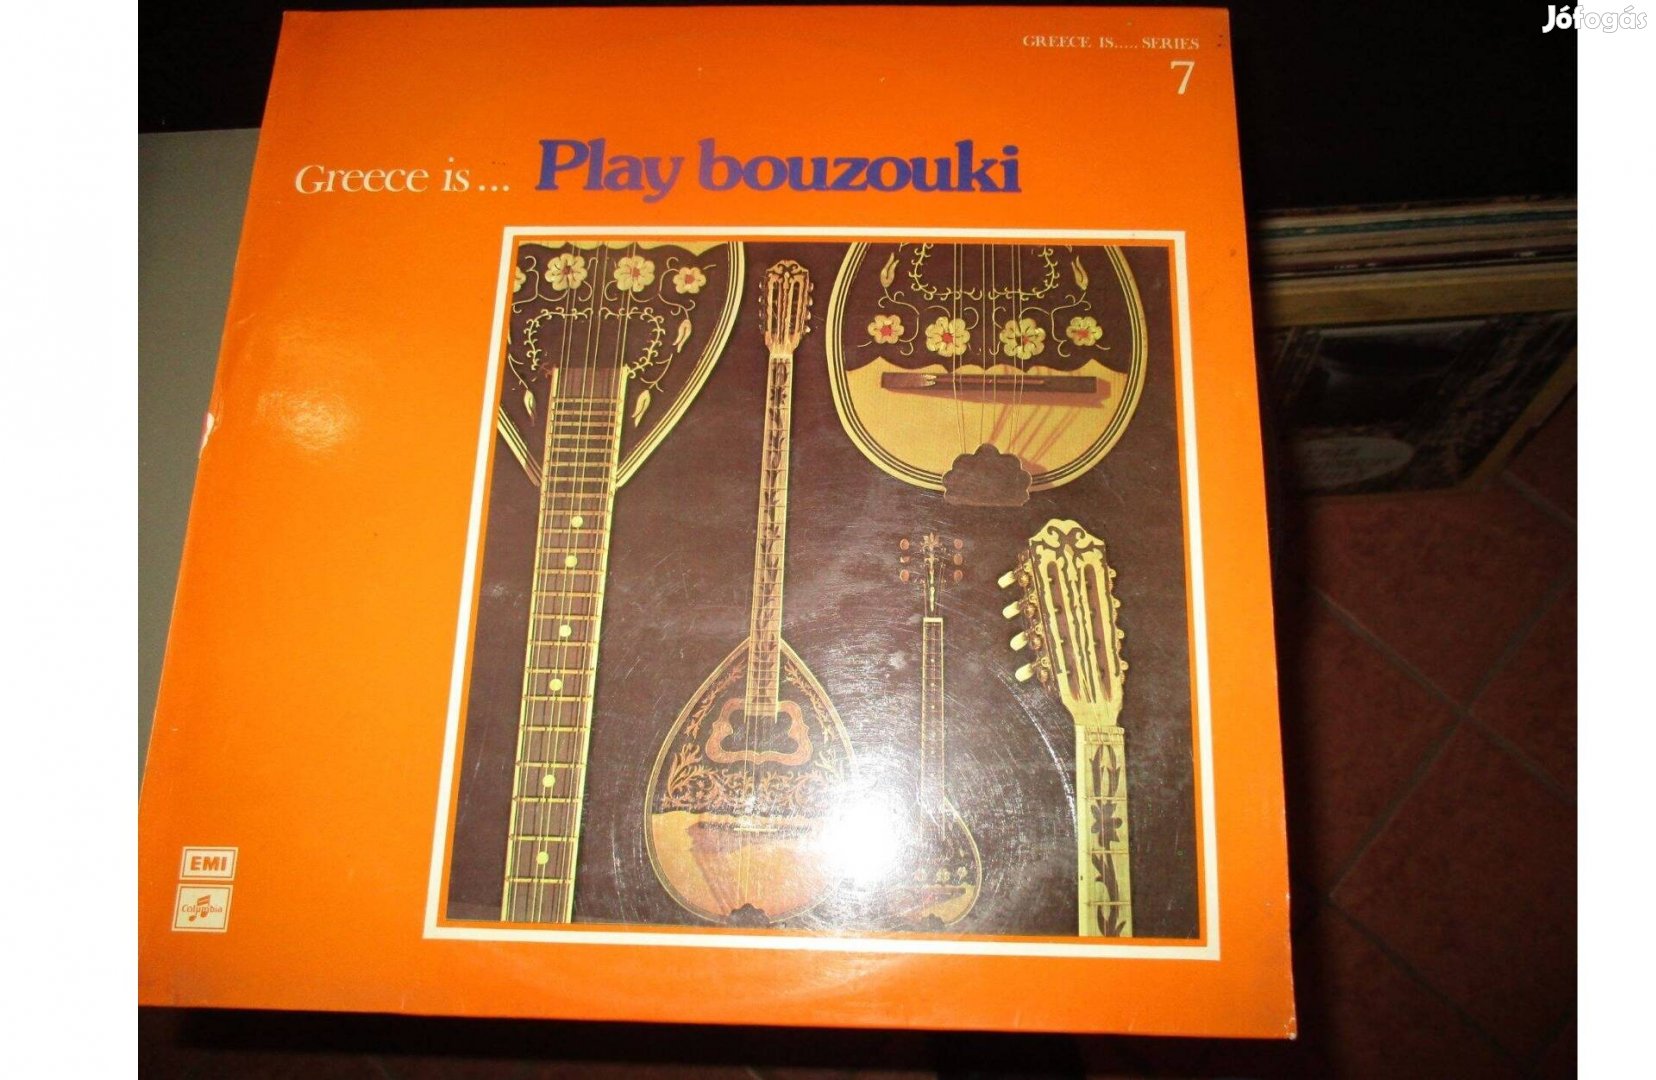 Play bouzouki bakelit haglemez eladó (görög zene)